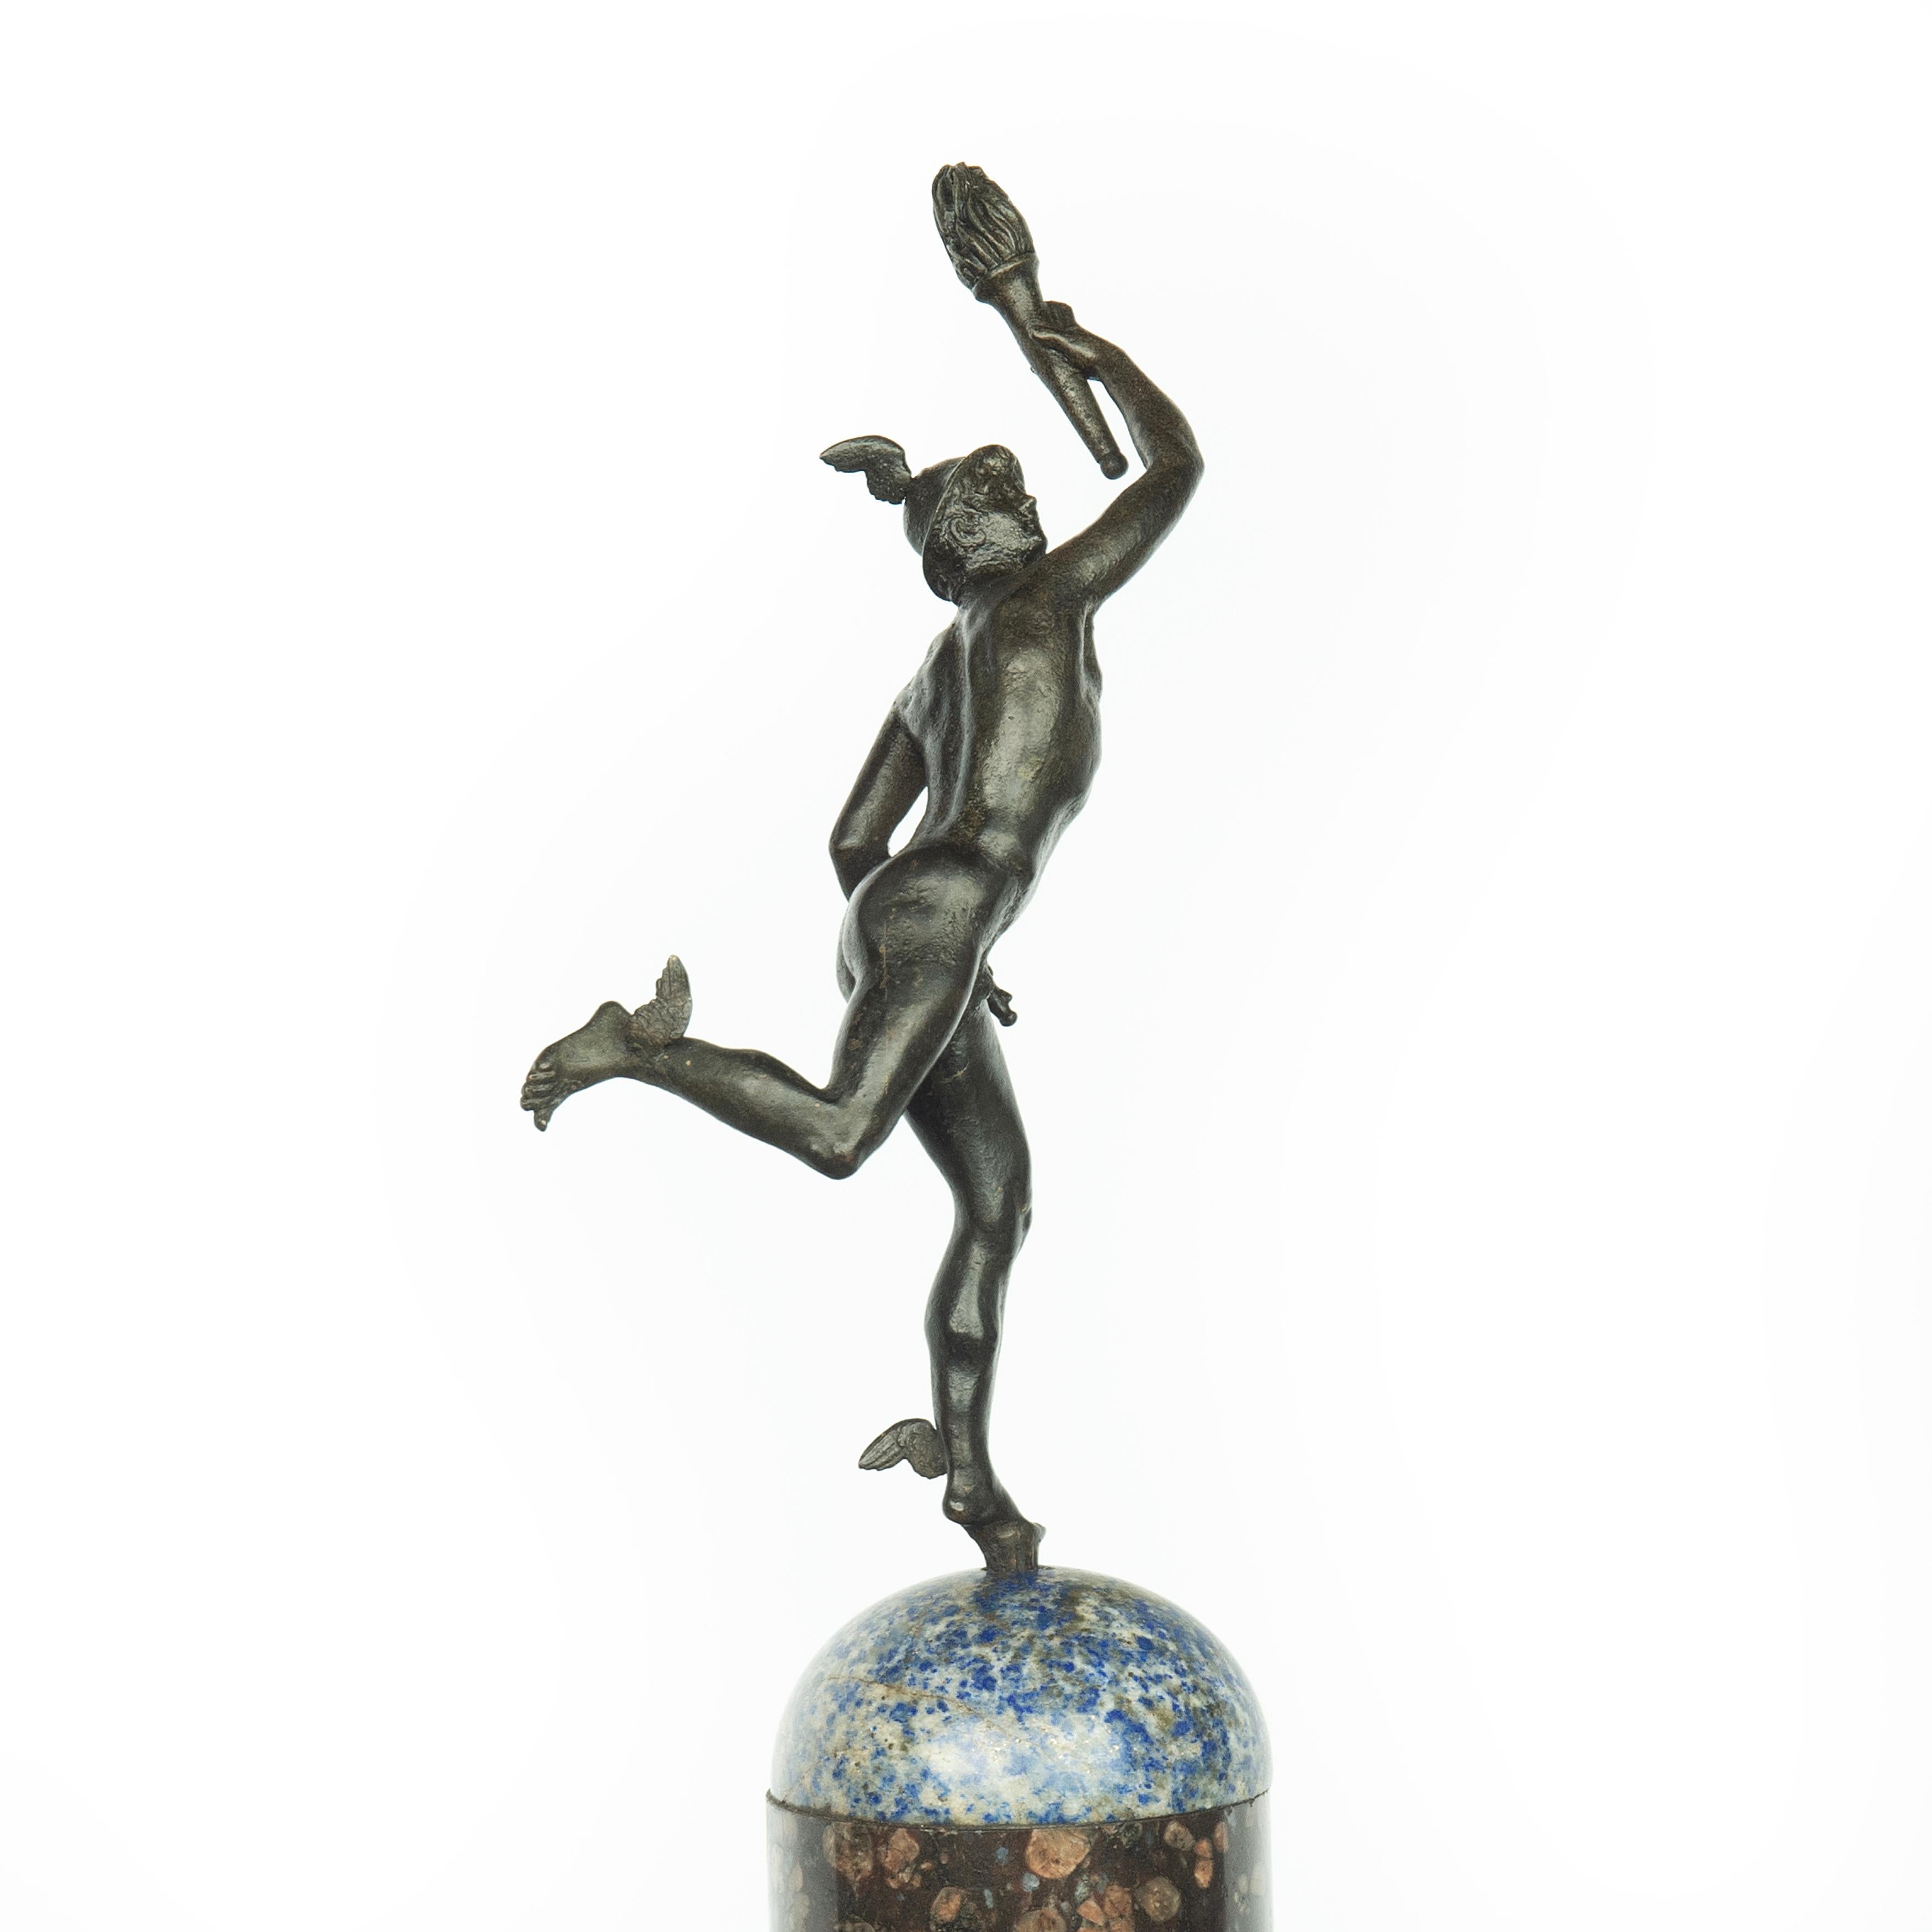 Italian A Grand Tour Regency bronze figure of Mercury (Hermes) on a marble column For Sale